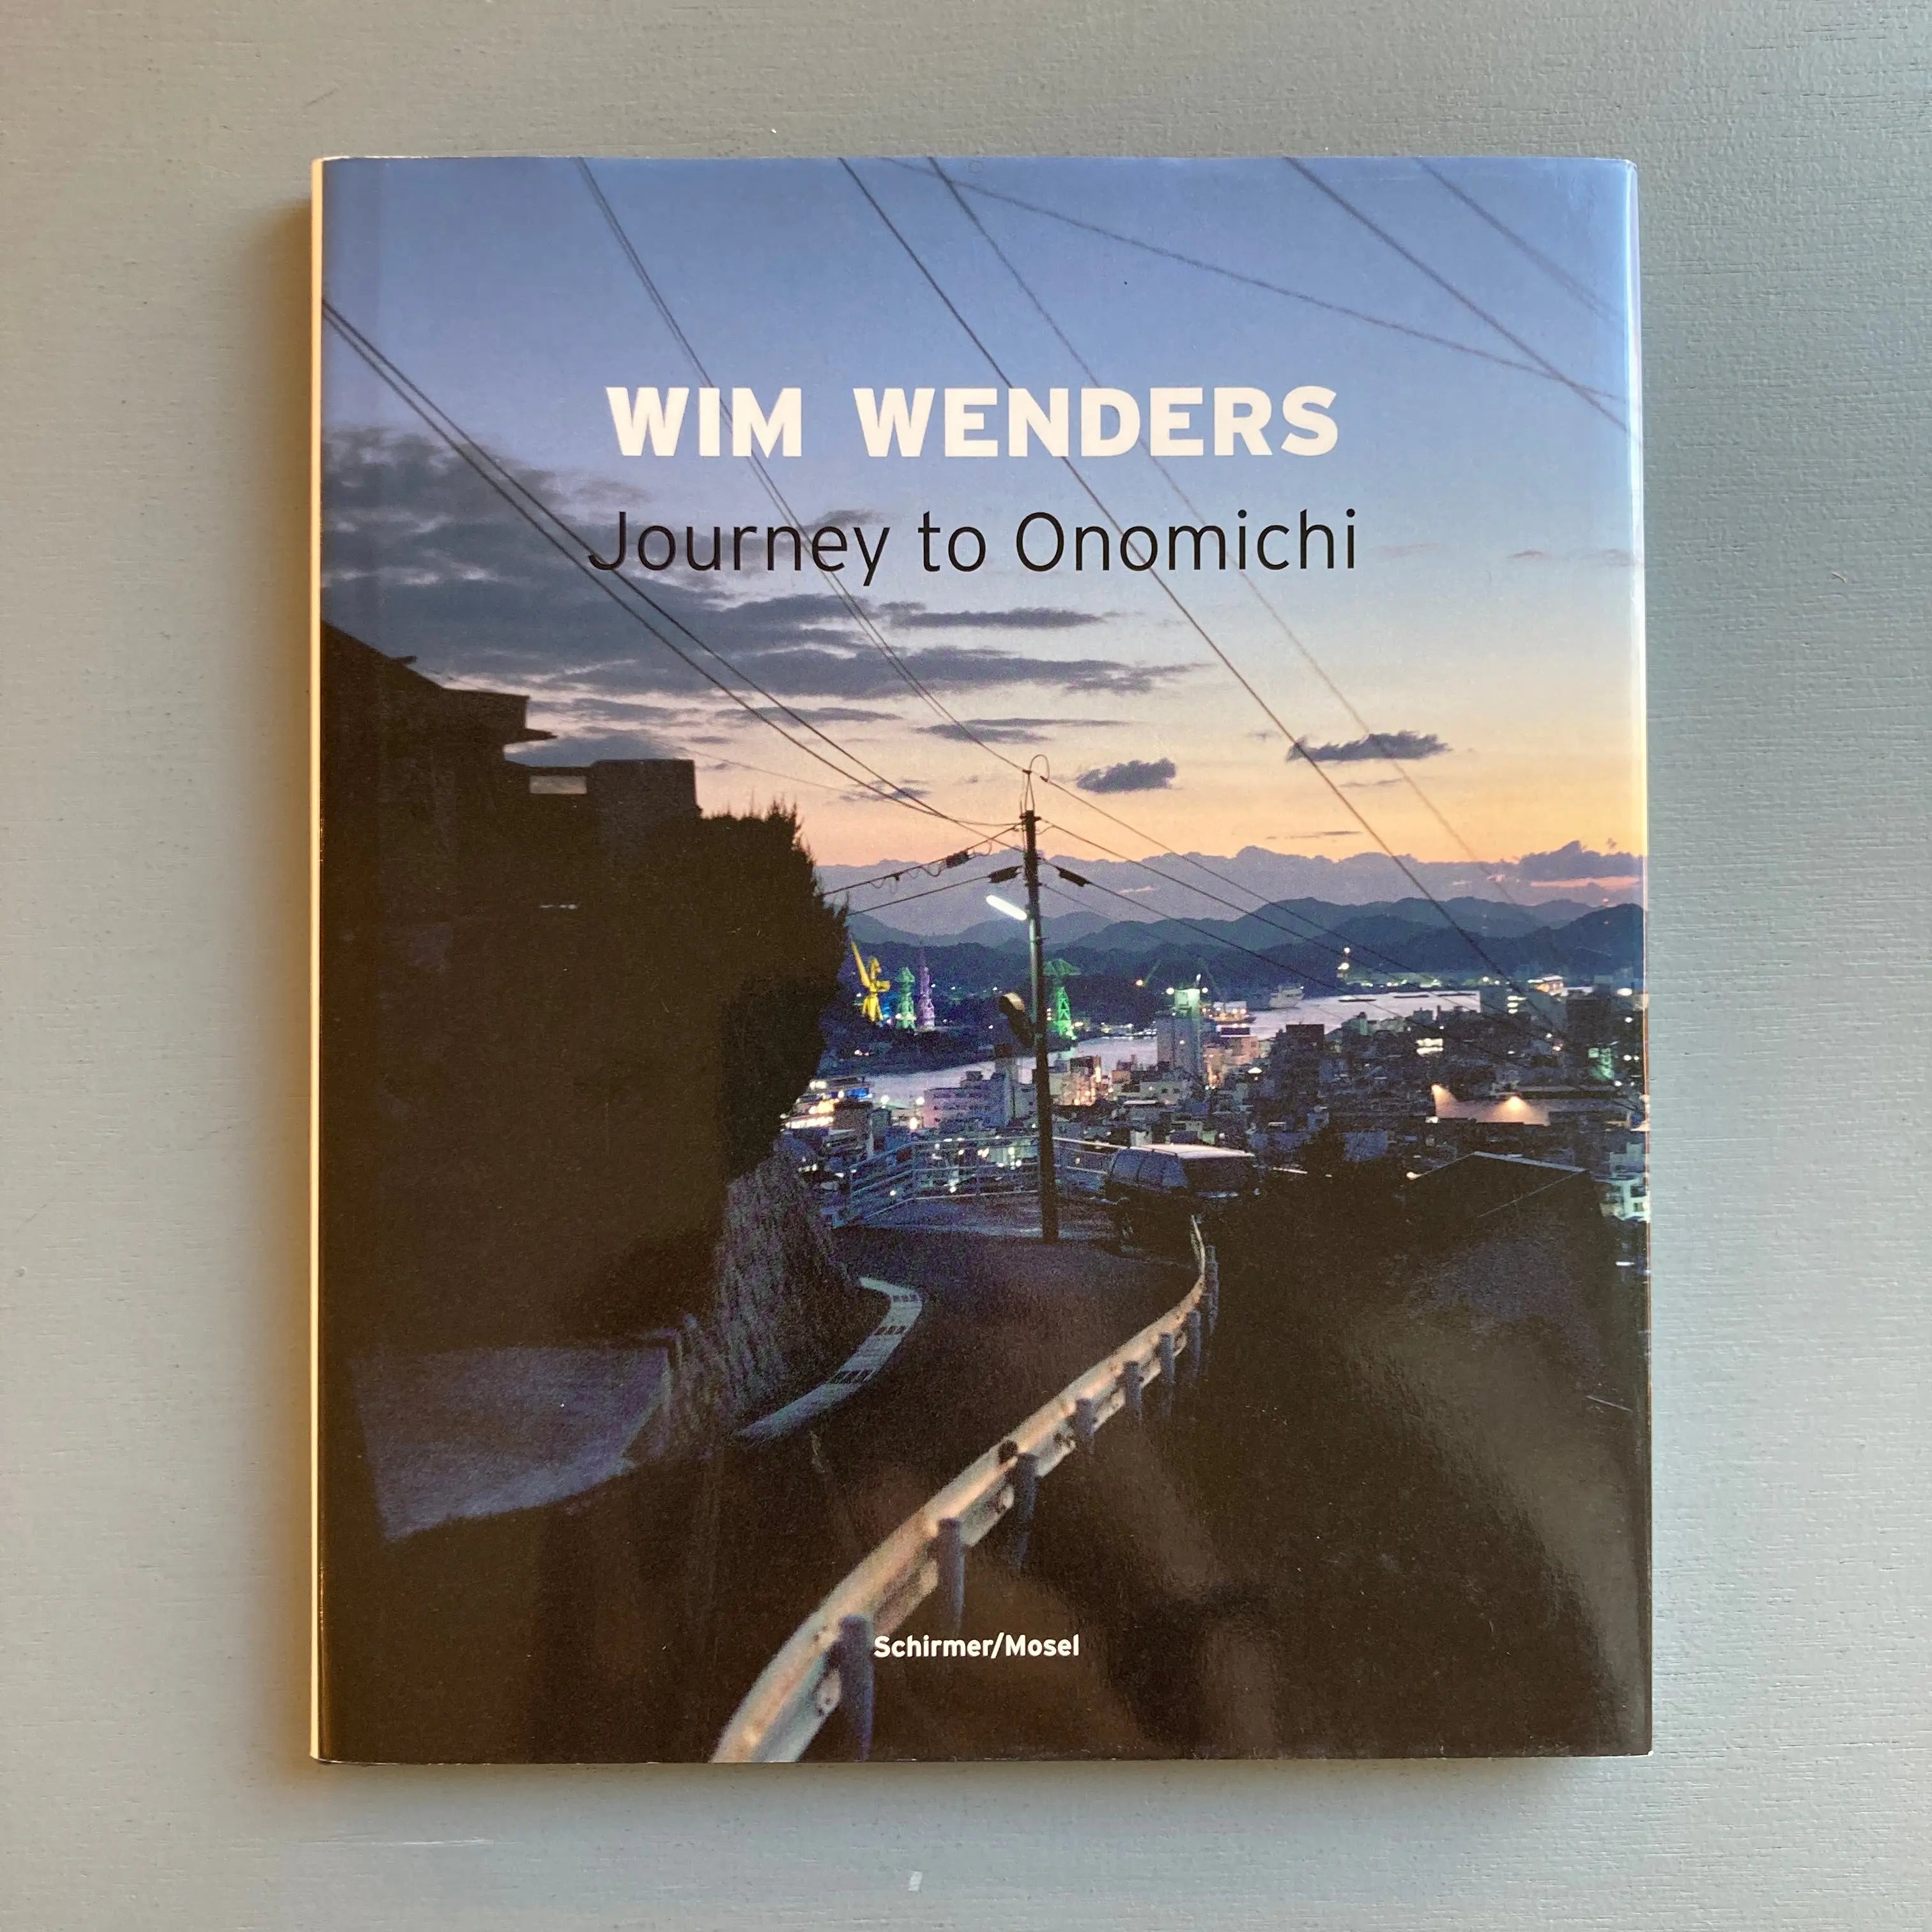 Wim Wenders - Journey to Onomichi - Schirmer/Mosel - Saint-Martin 